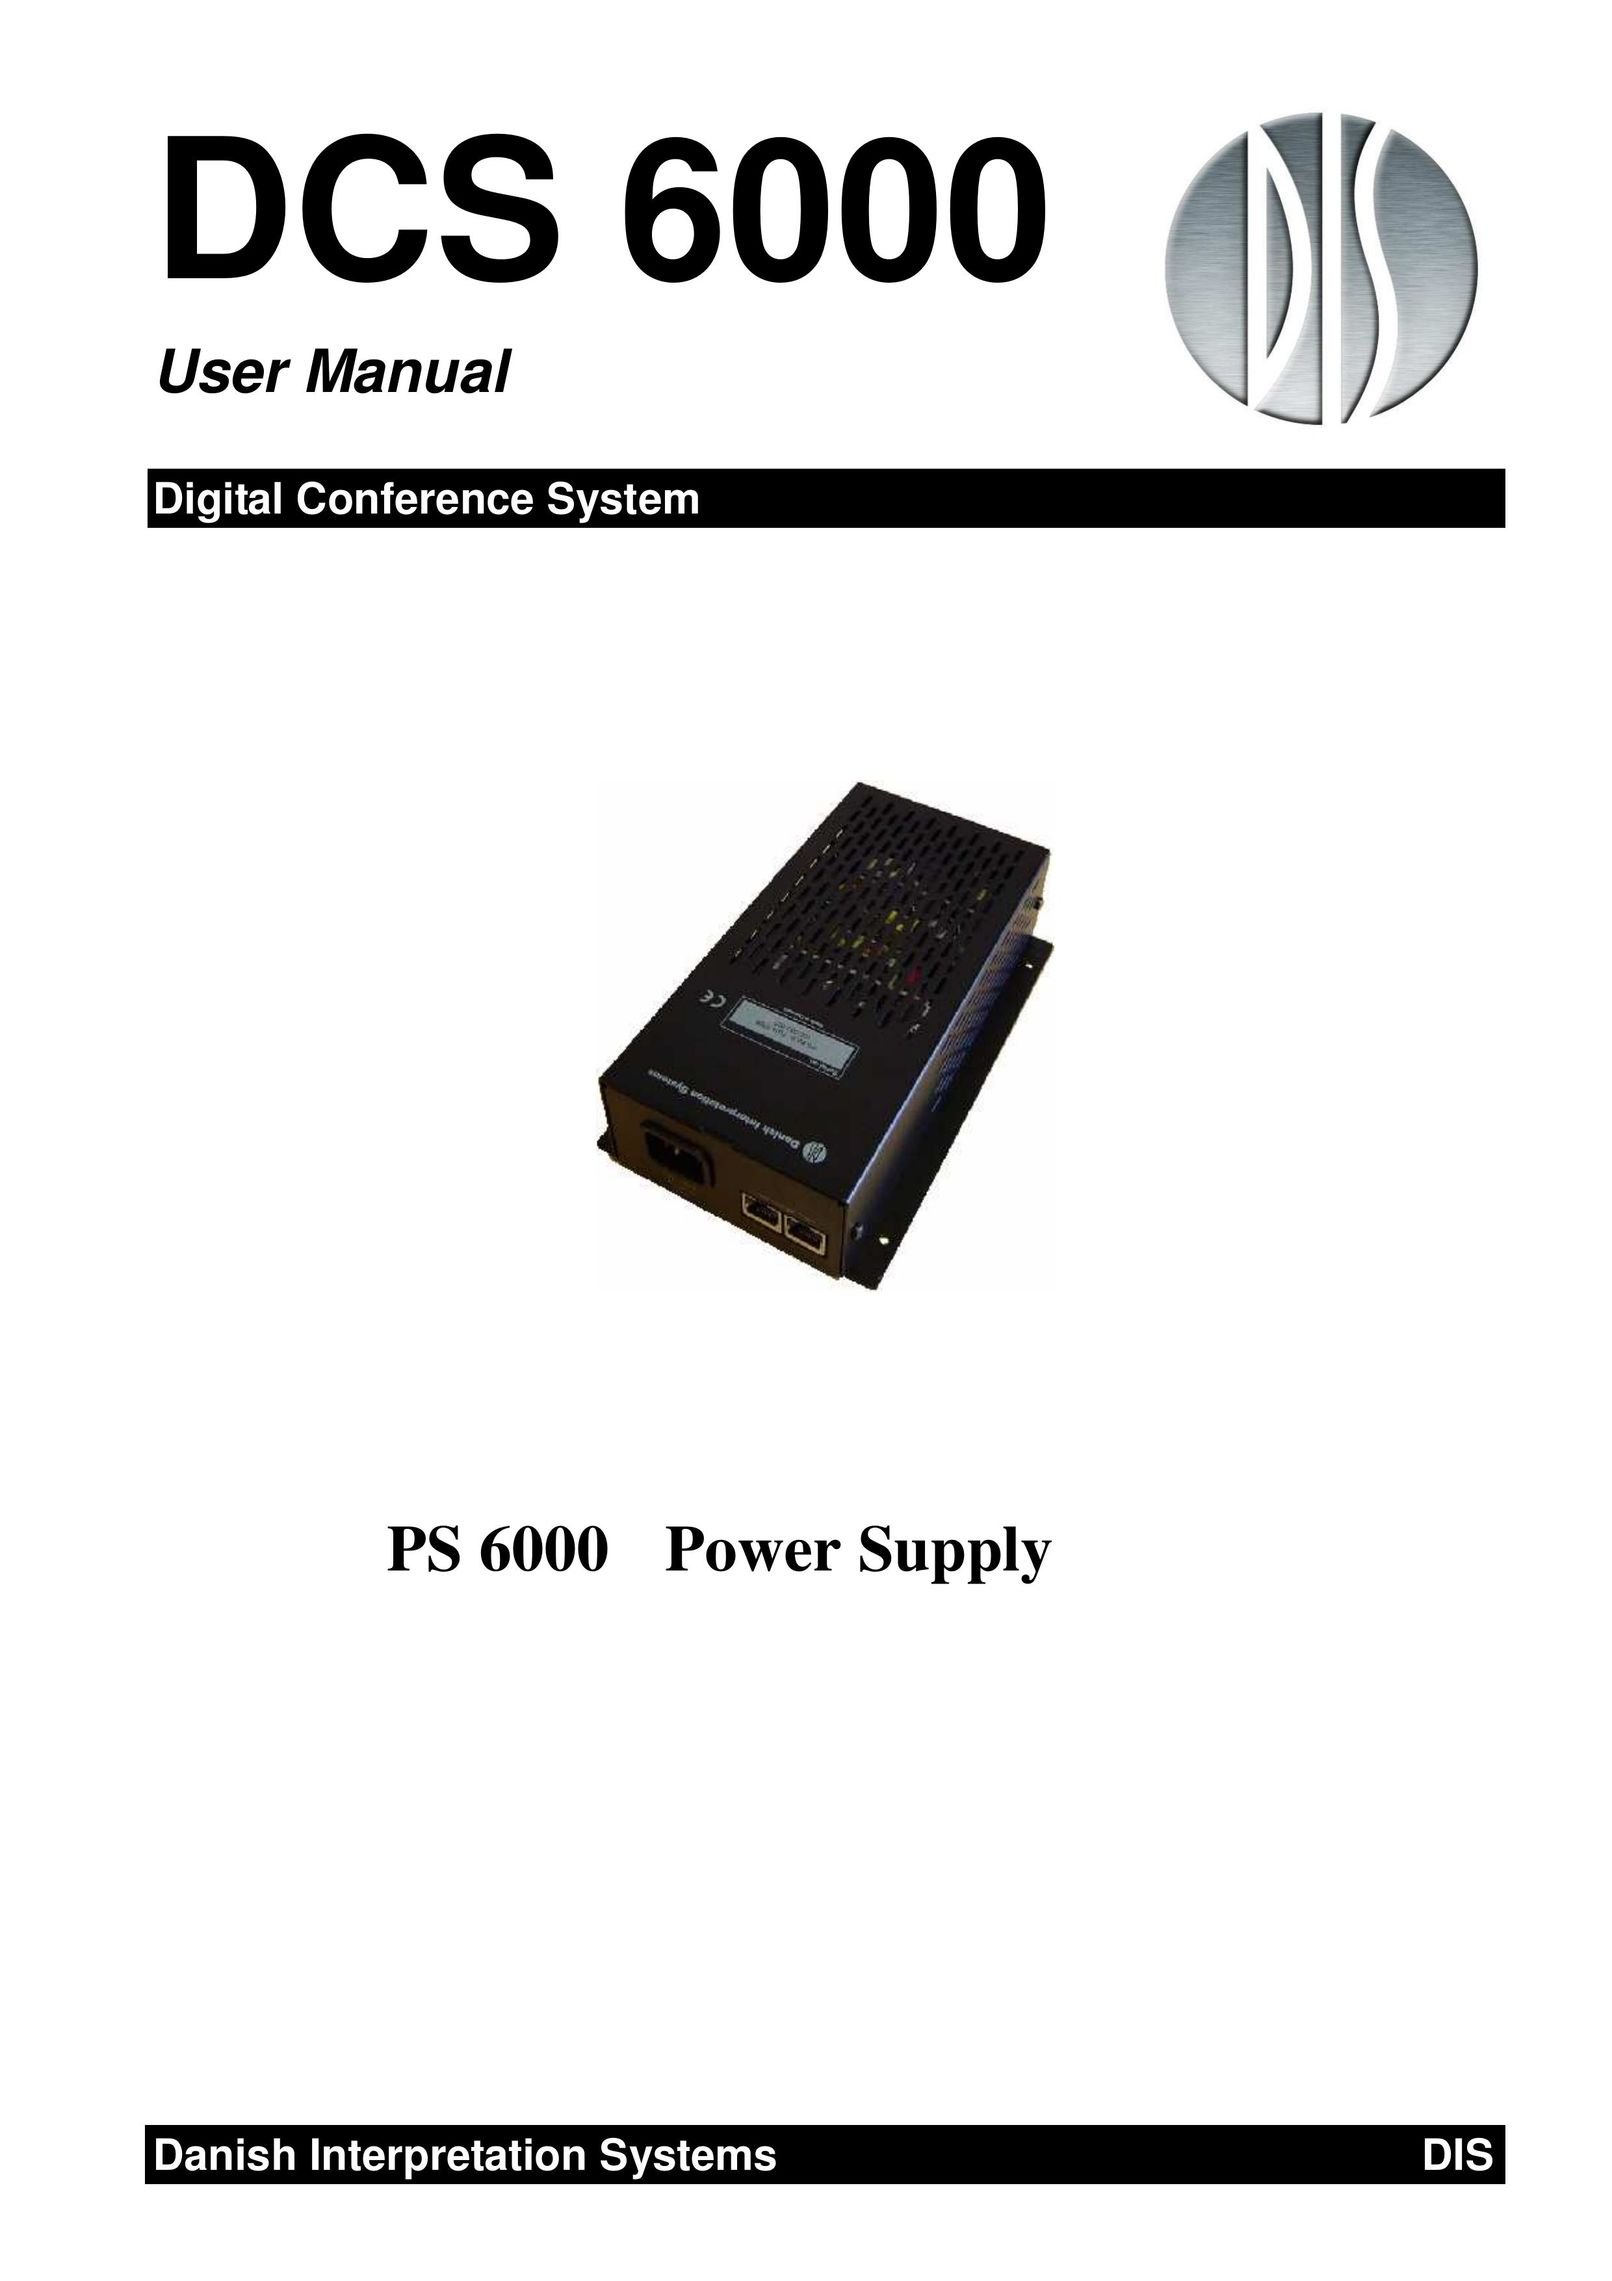 Listen Technologies PS 6000 Power Supply User Manual